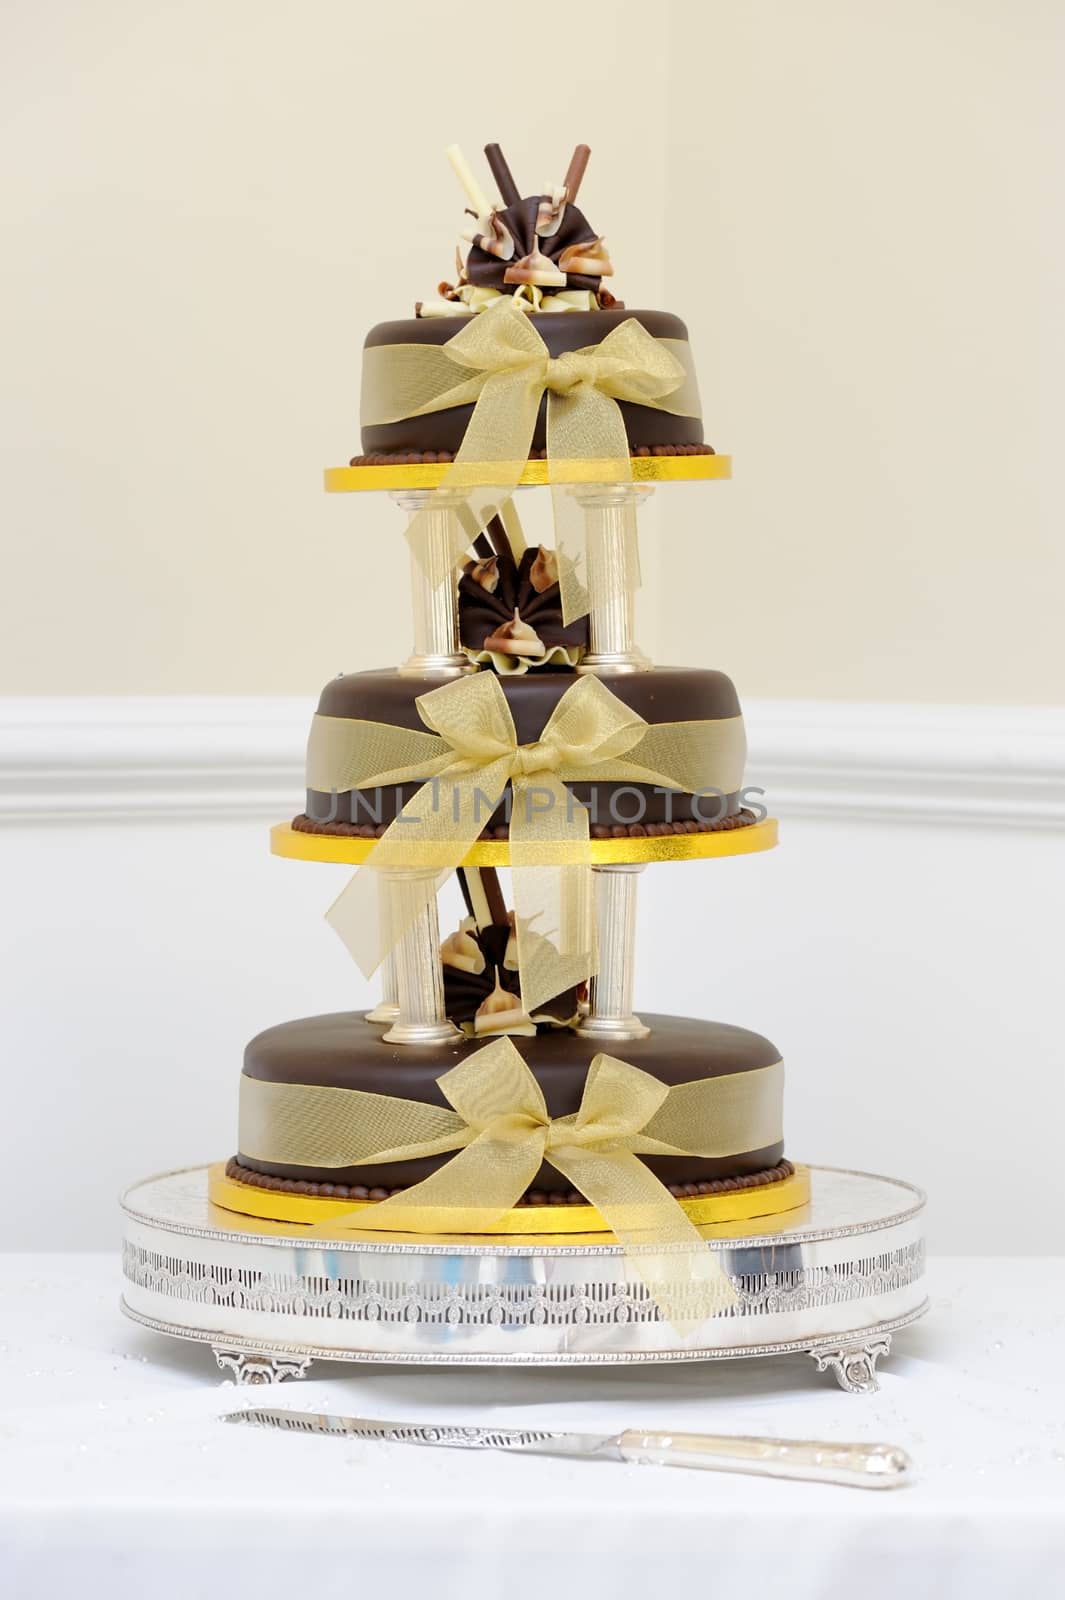 Chocolate wedding cake by kmwphotography